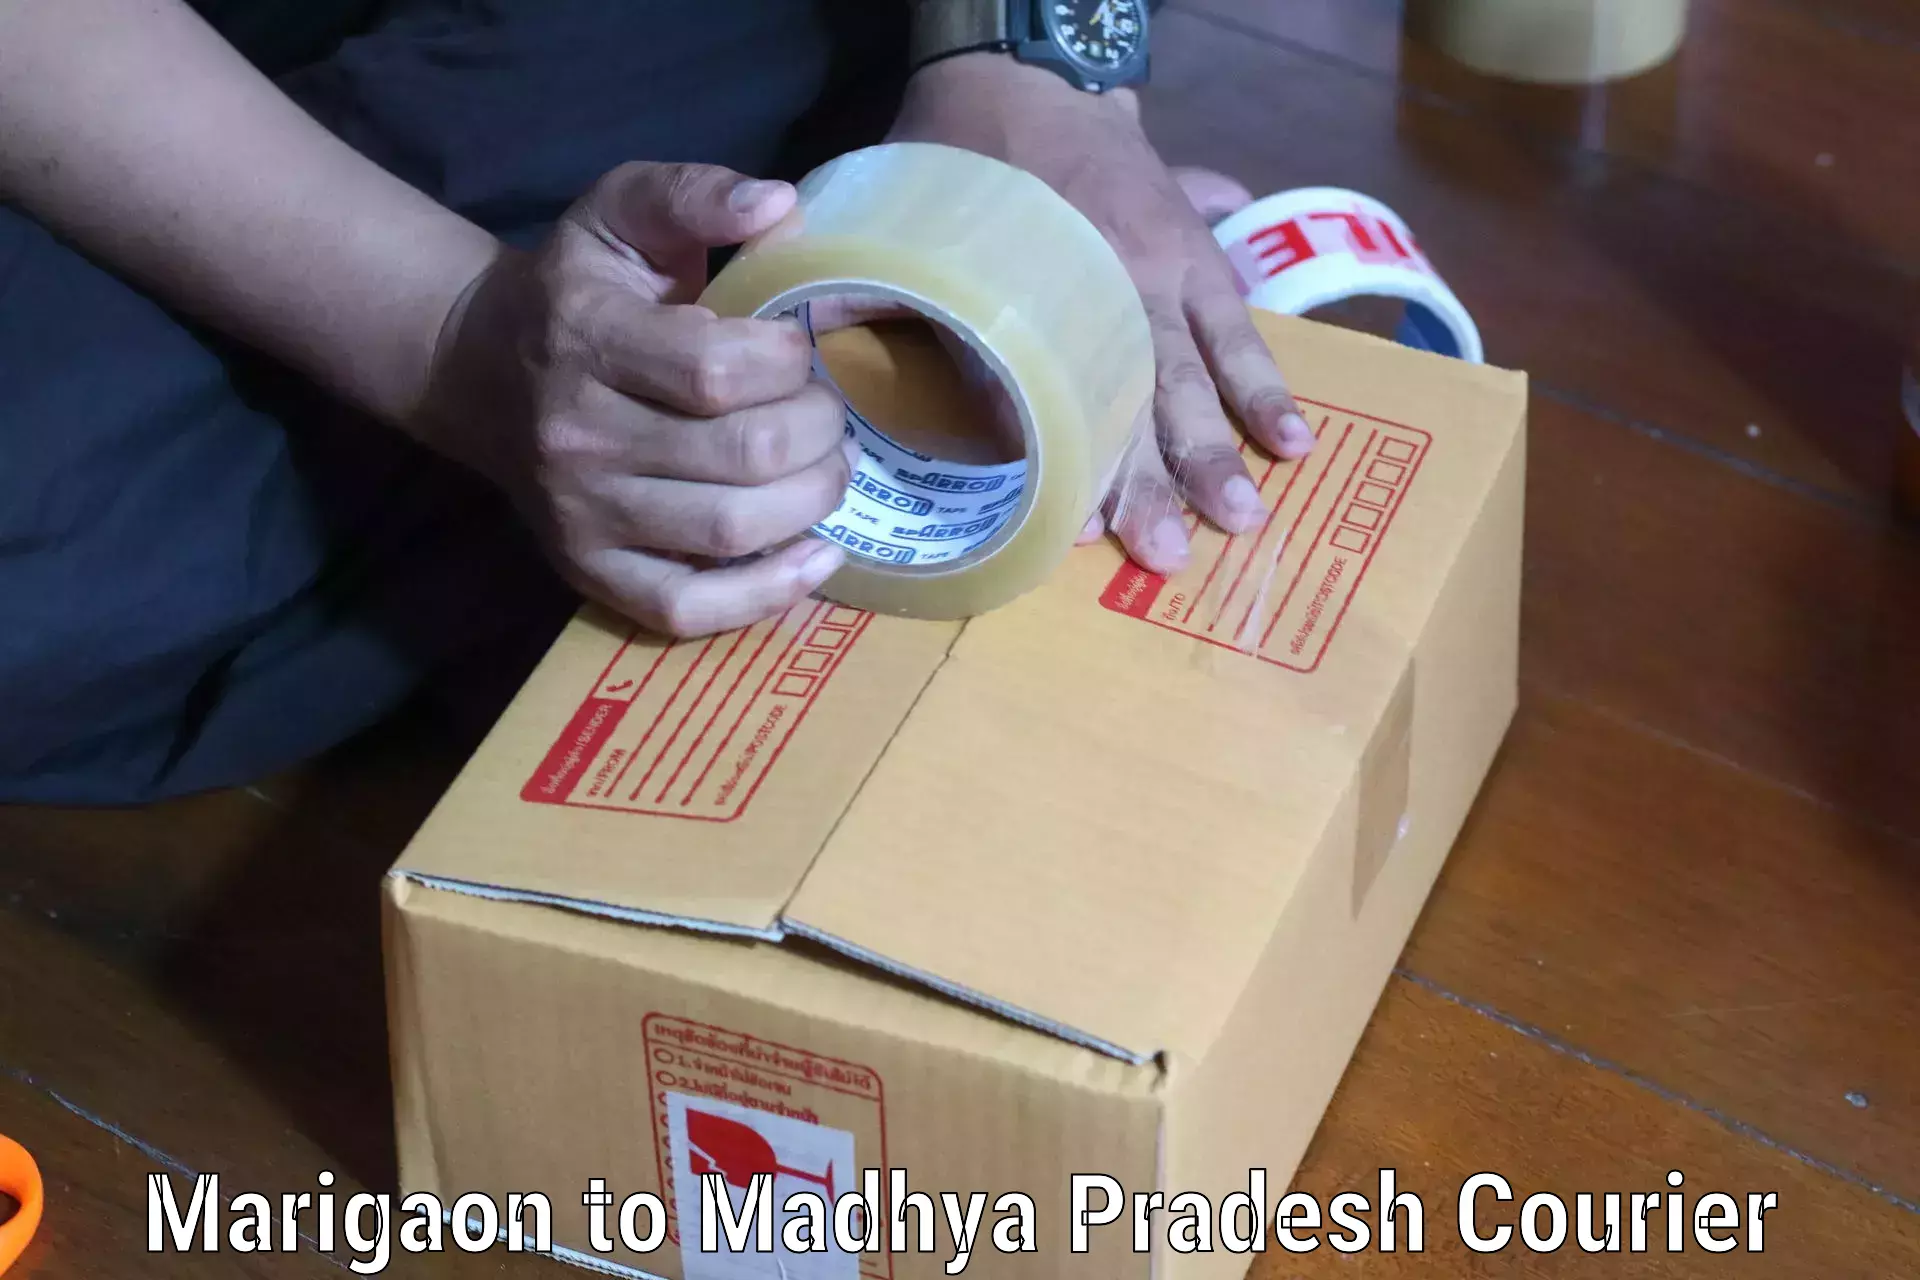 Expedited shipping methods Marigaon to Sidhi